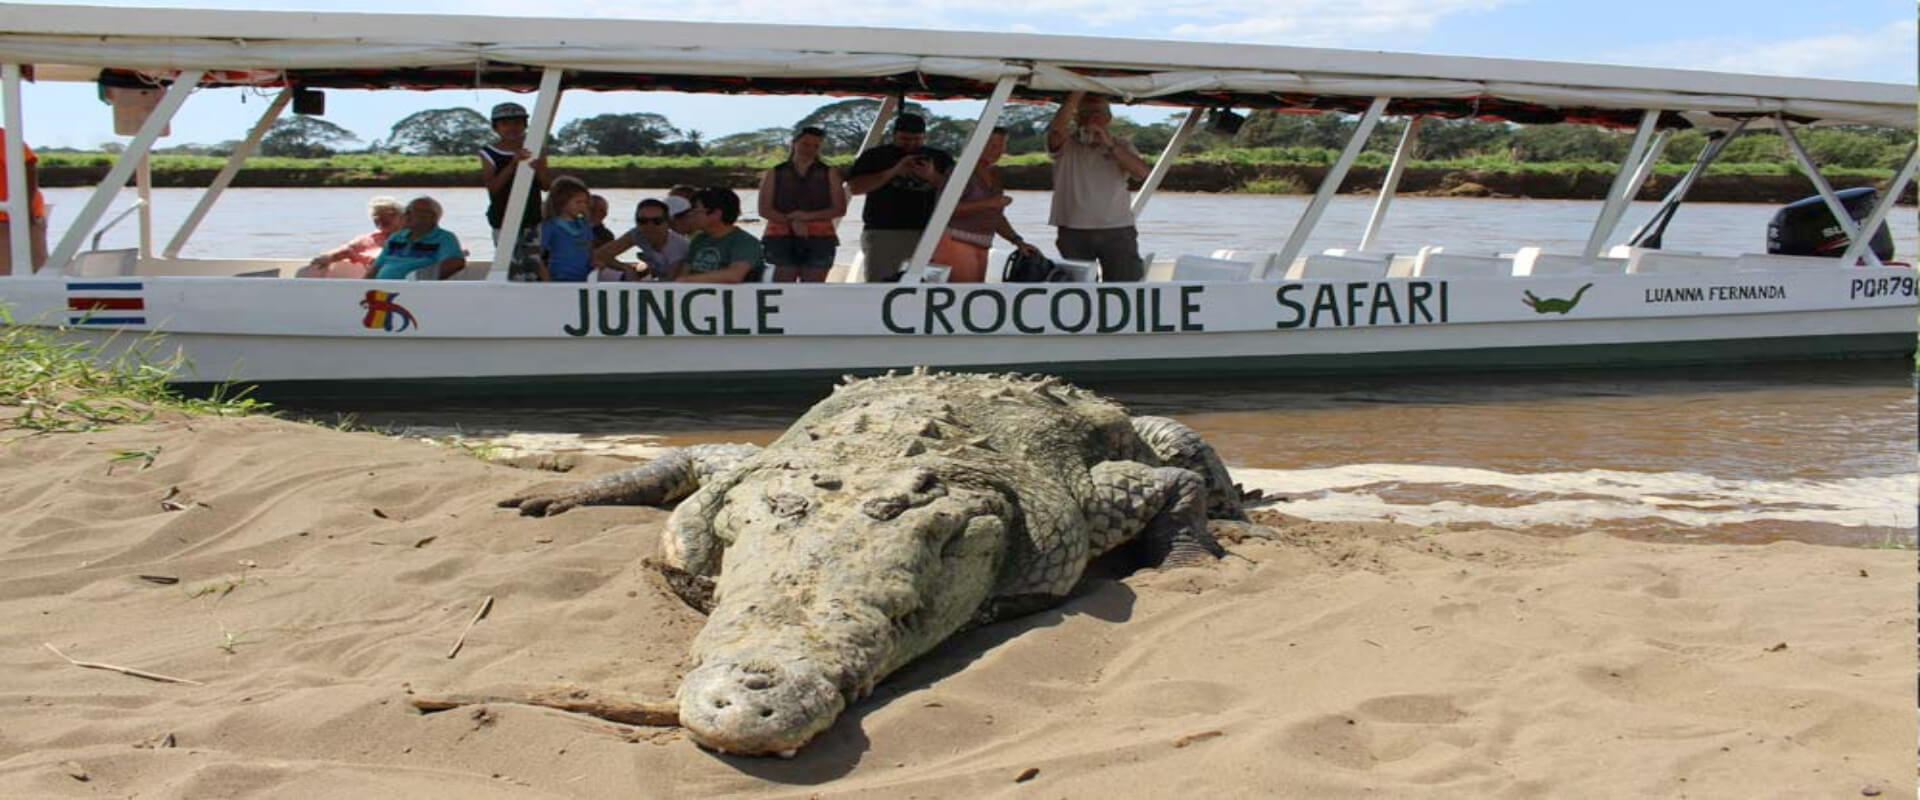 Jungle Corcodile Safari Tour | Costa Rica Jade Tours